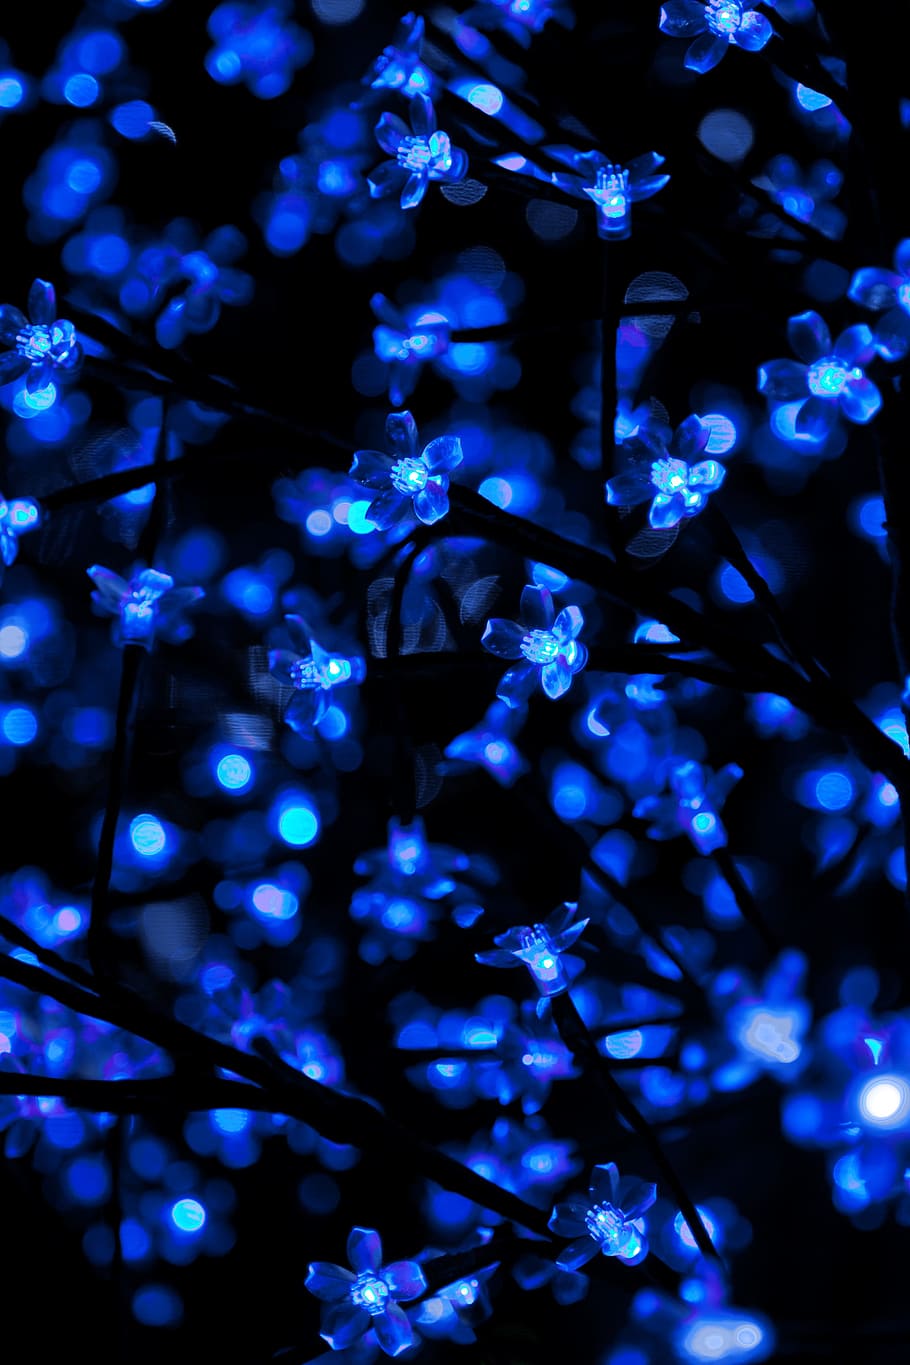 lighted, blue, string lights, Blue LED, LED light, plant, decor, abstract, background, bright